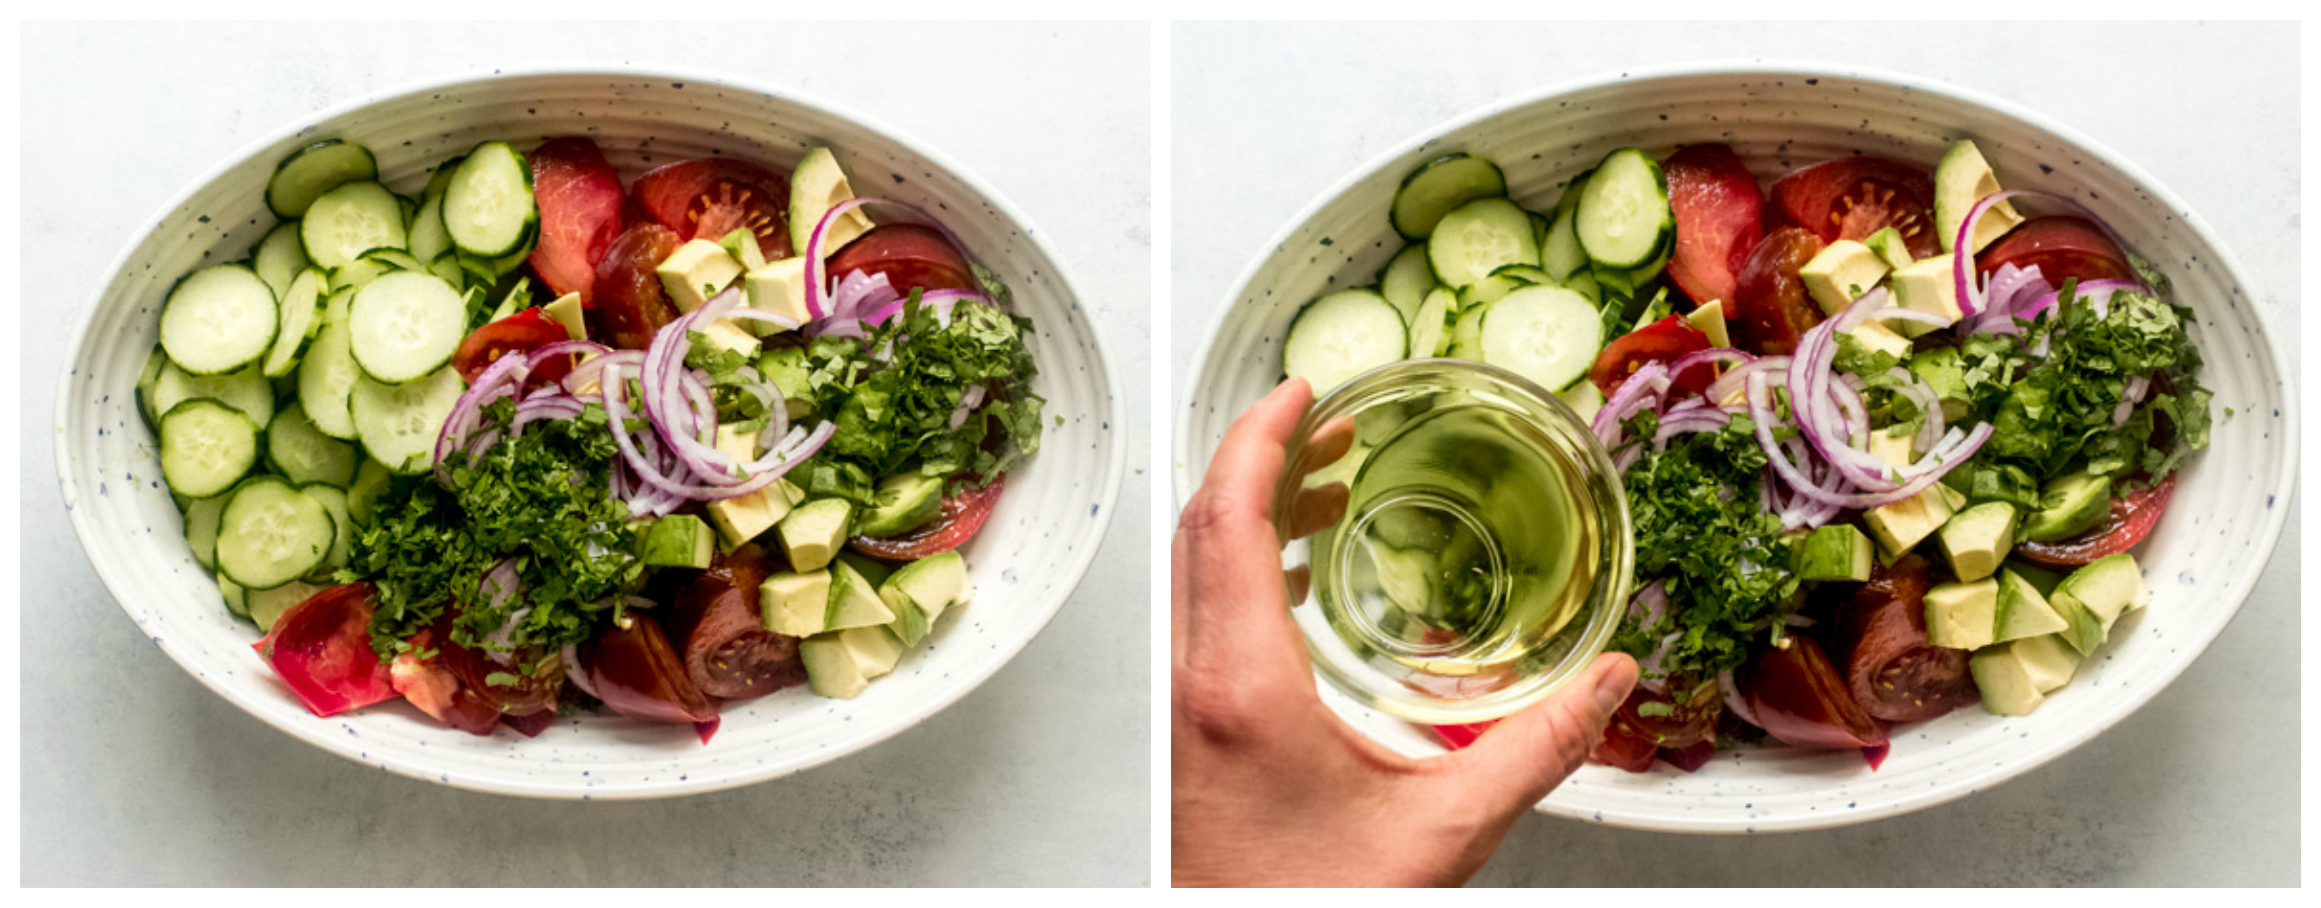 how to make heirloom tomato salad recipe